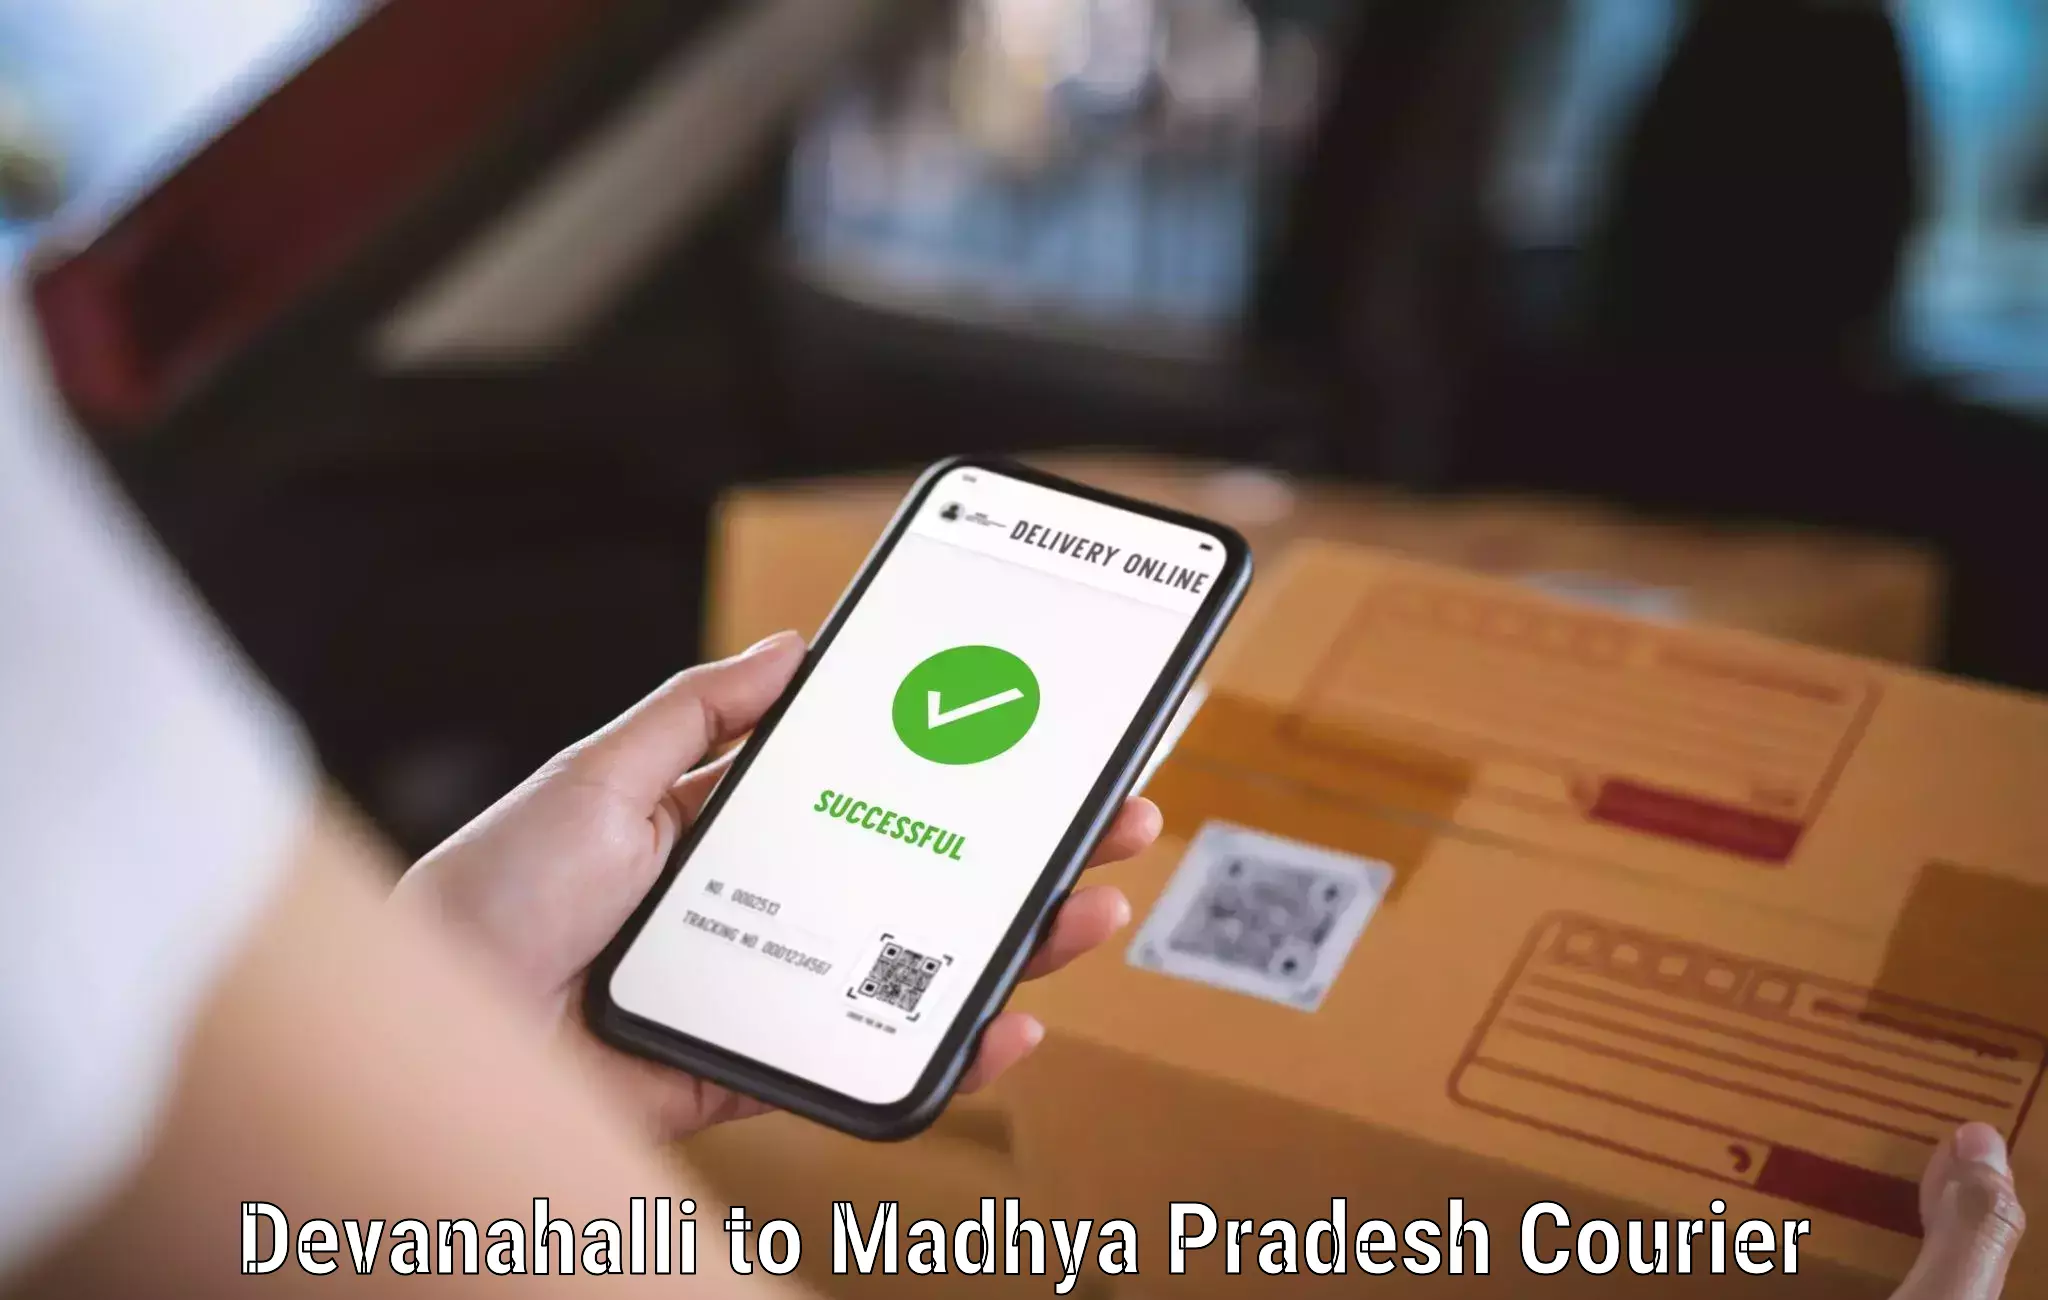 High-speed parcel service Devanahalli to Indore